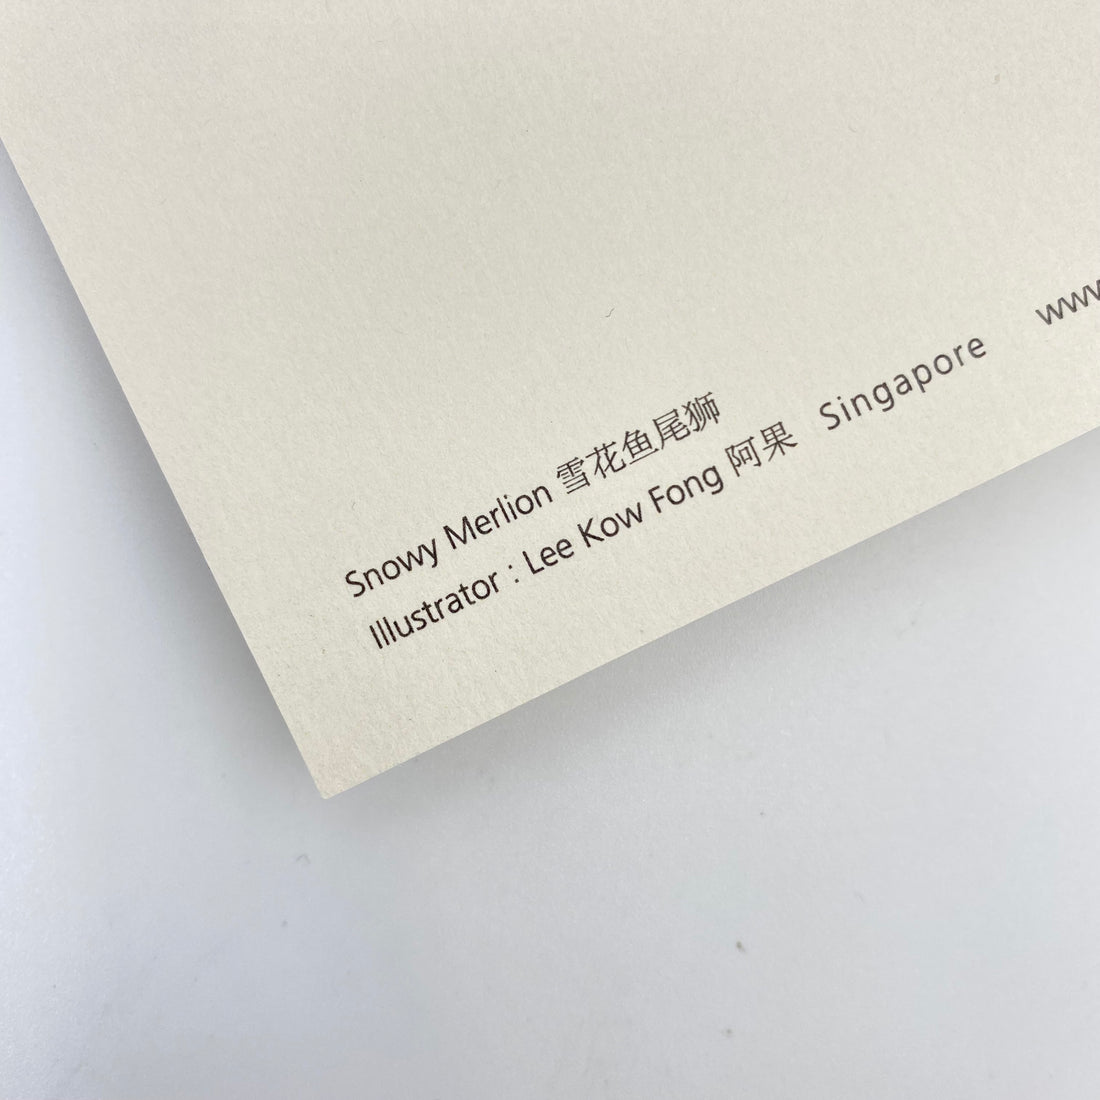 Ah Guo 2020 greeting card Snowy Merlion